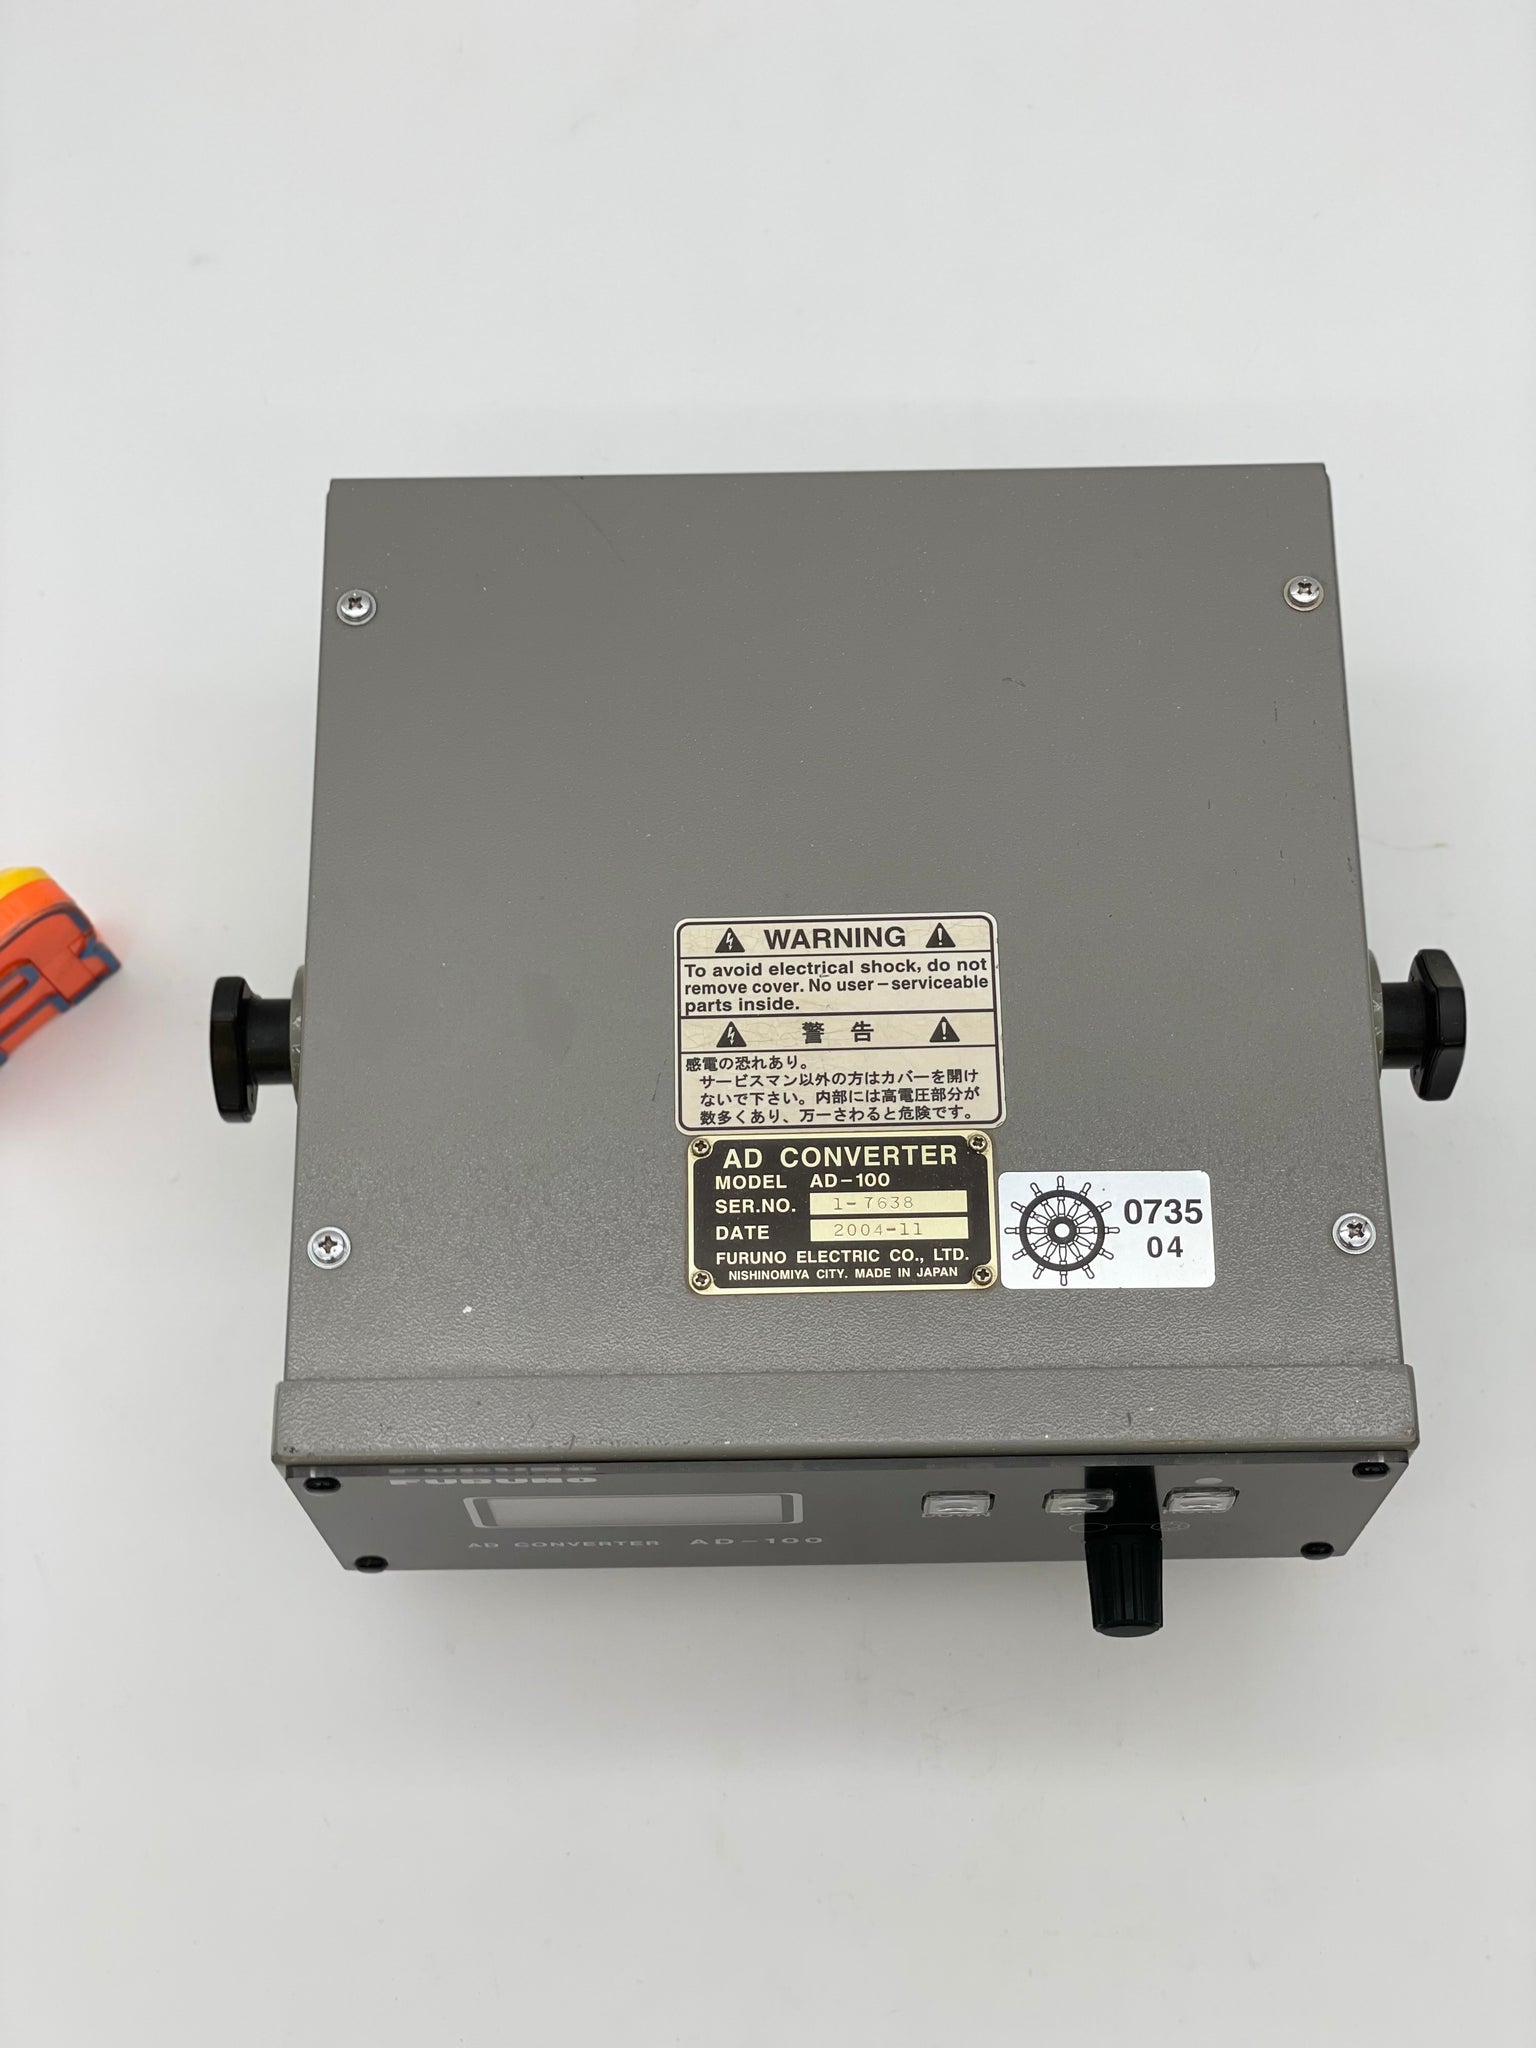 Furuno AD-100 Gyro AD Analog to Digital Converter (Used) – Gulf 